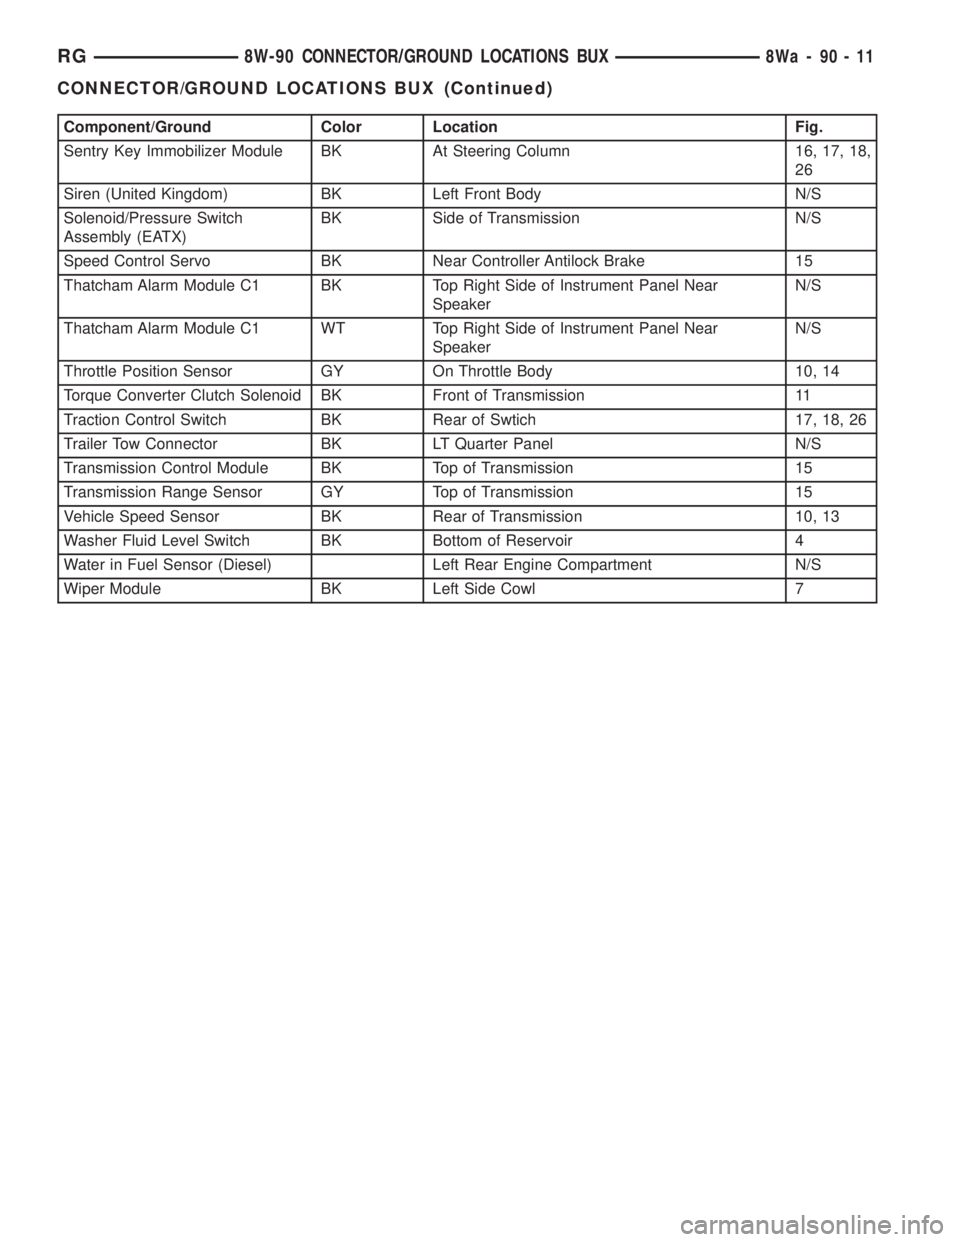 CHRYSLER VOYAGER 2001  Service Manual Component/Ground Color Location Fig.
Sentry Key Immobilizer Module BK At Steering Column 16, 17, 18,
26
Siren (United Kingdom) BK Left Front Body N/S
Solenoid/Pressure Switch
Assembly (EATX)BK Side of